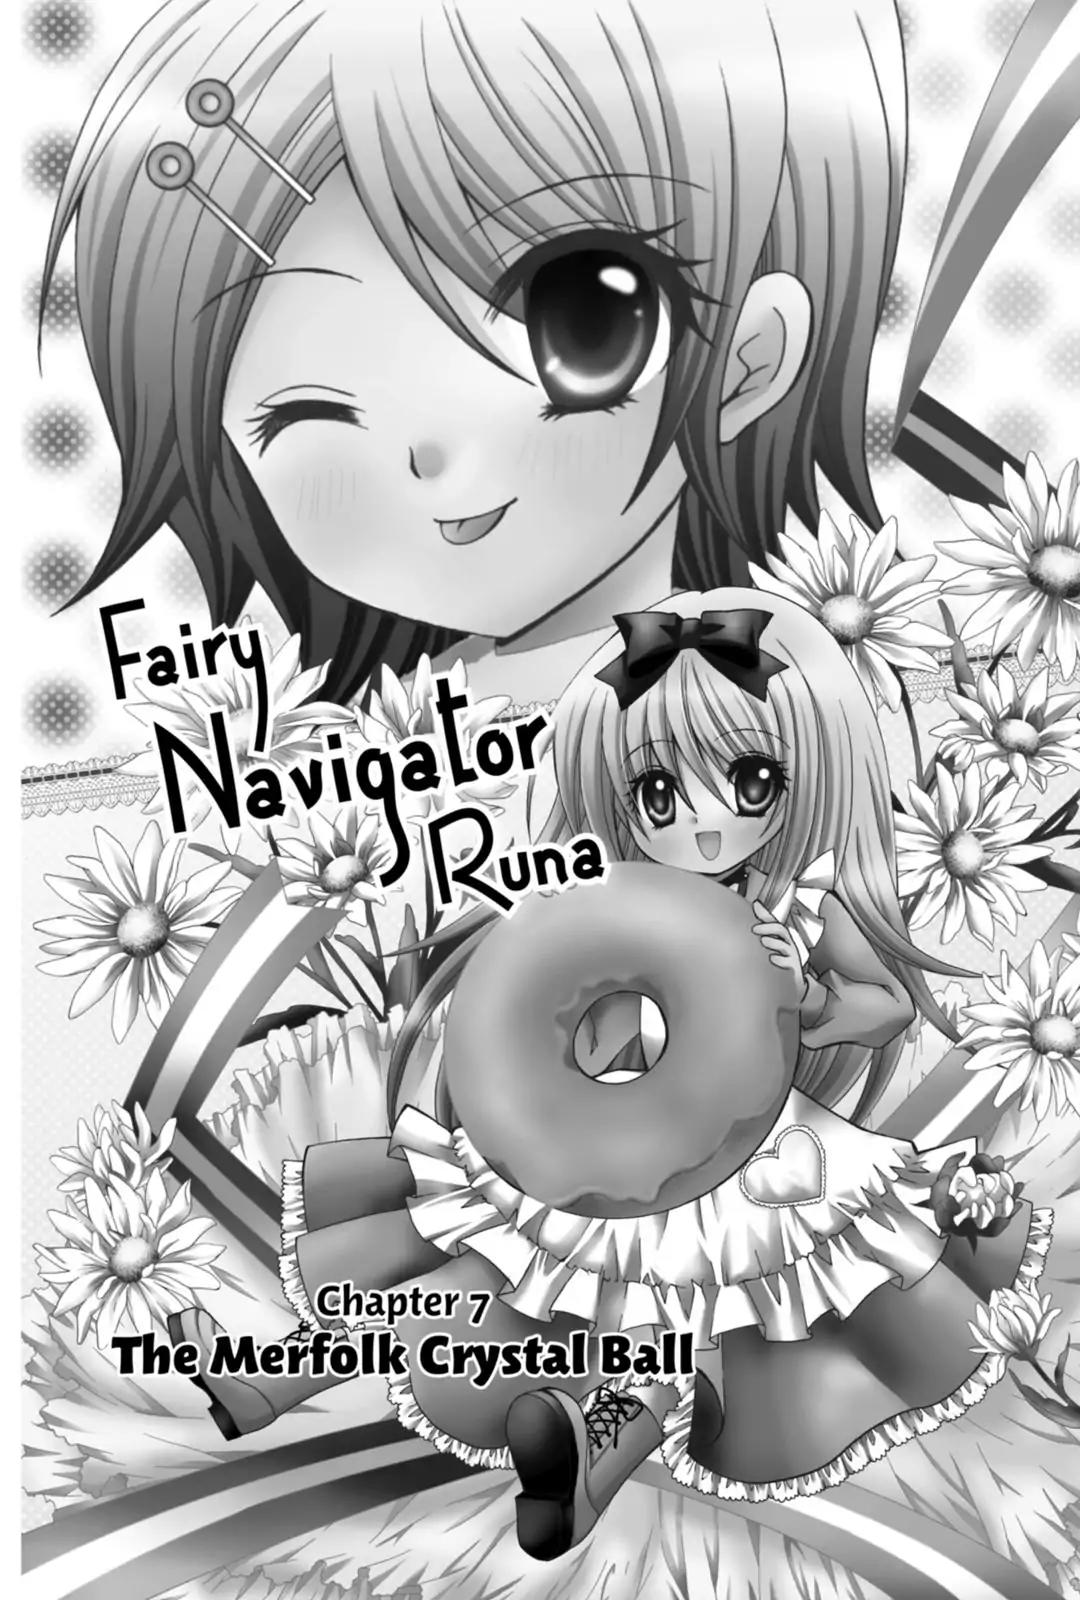 Fairy Navigator Runa Vol.2 Chapter 7: